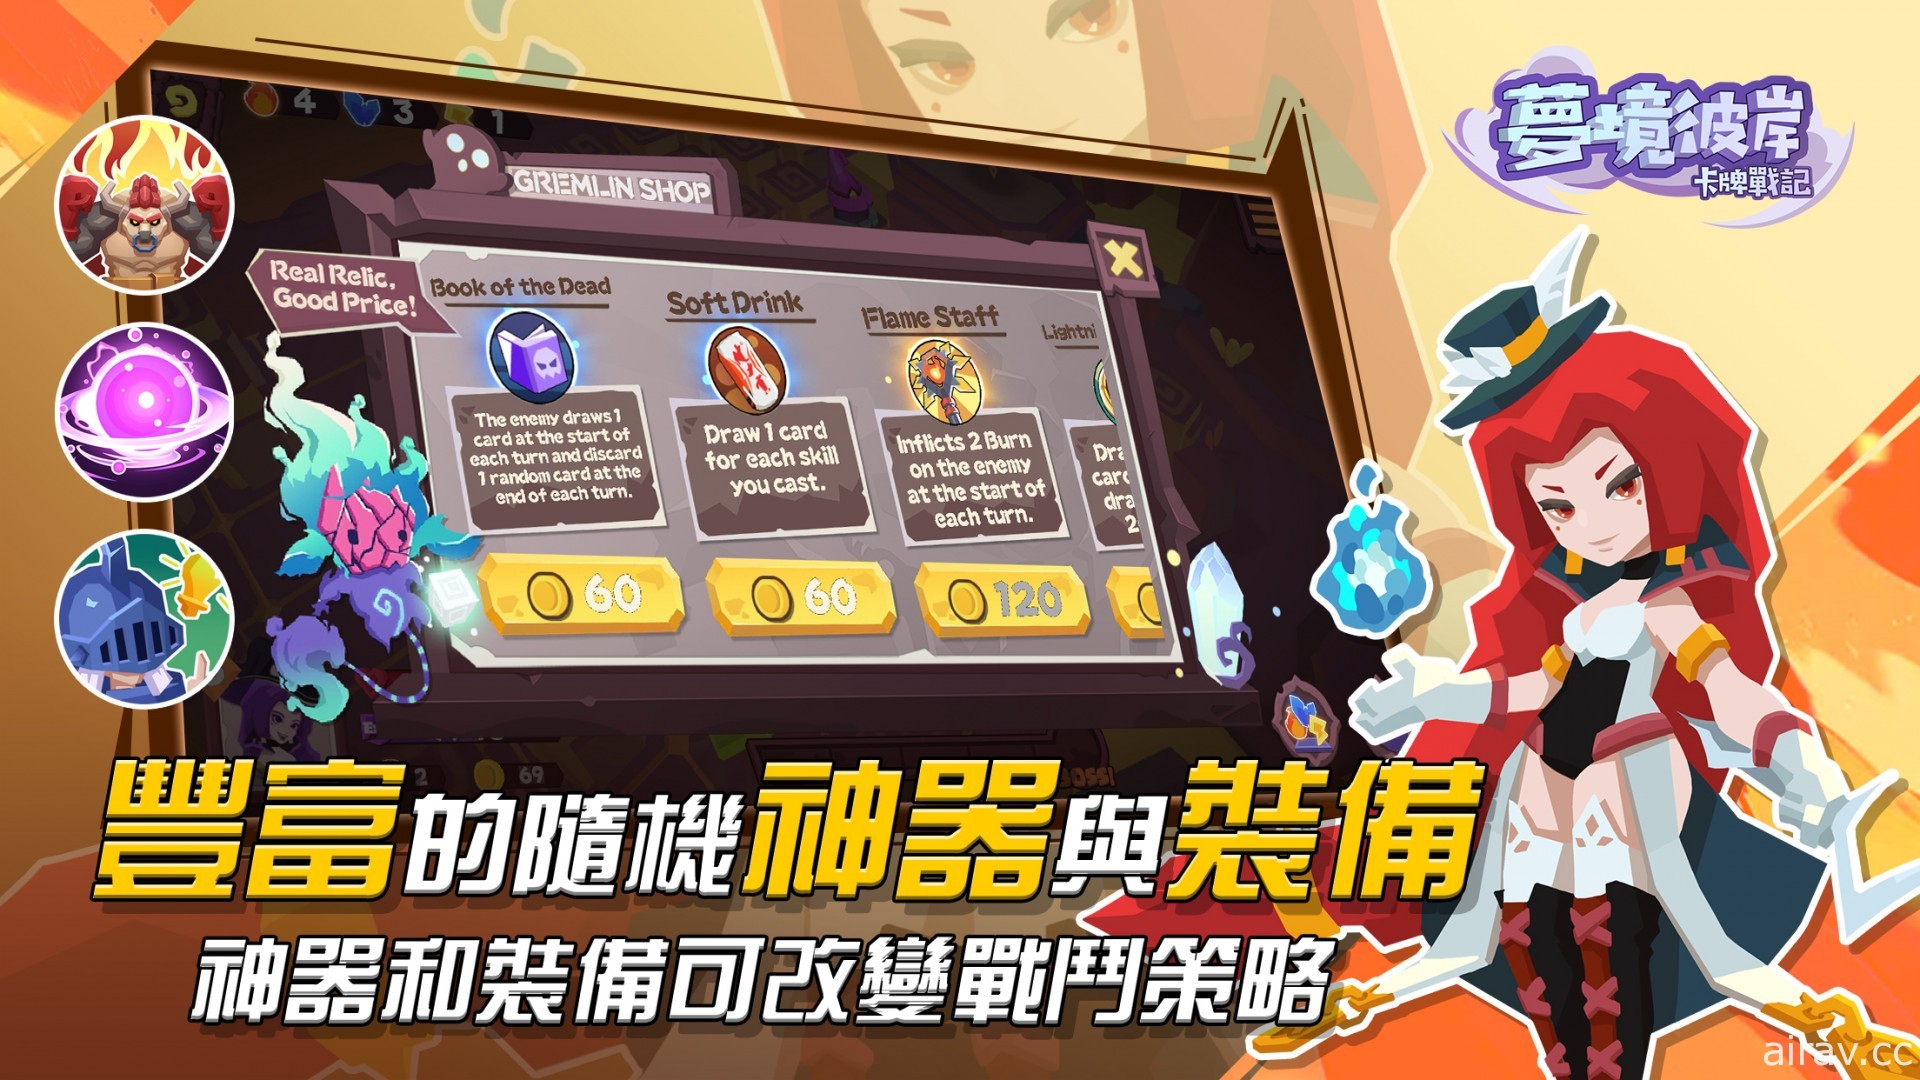 Roguelike 卡牌冒险游戏《梦境彼岸：卡牌战记》iOS 版上线 在梦境中挑战敌人